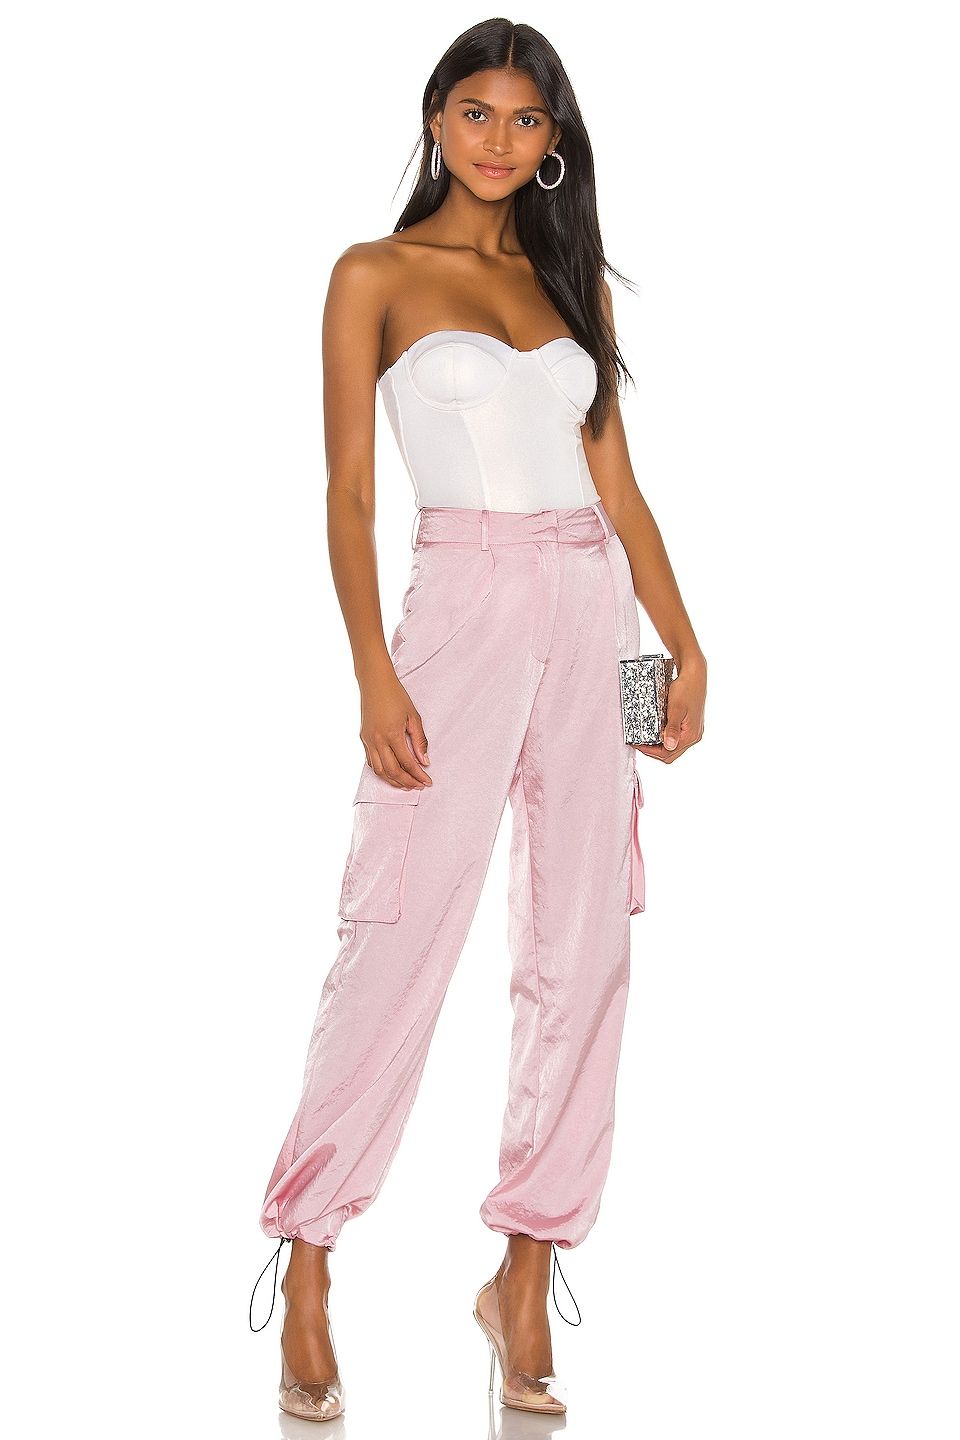 Favorite flowy style pants for summer heat? : r/SoftDramatics